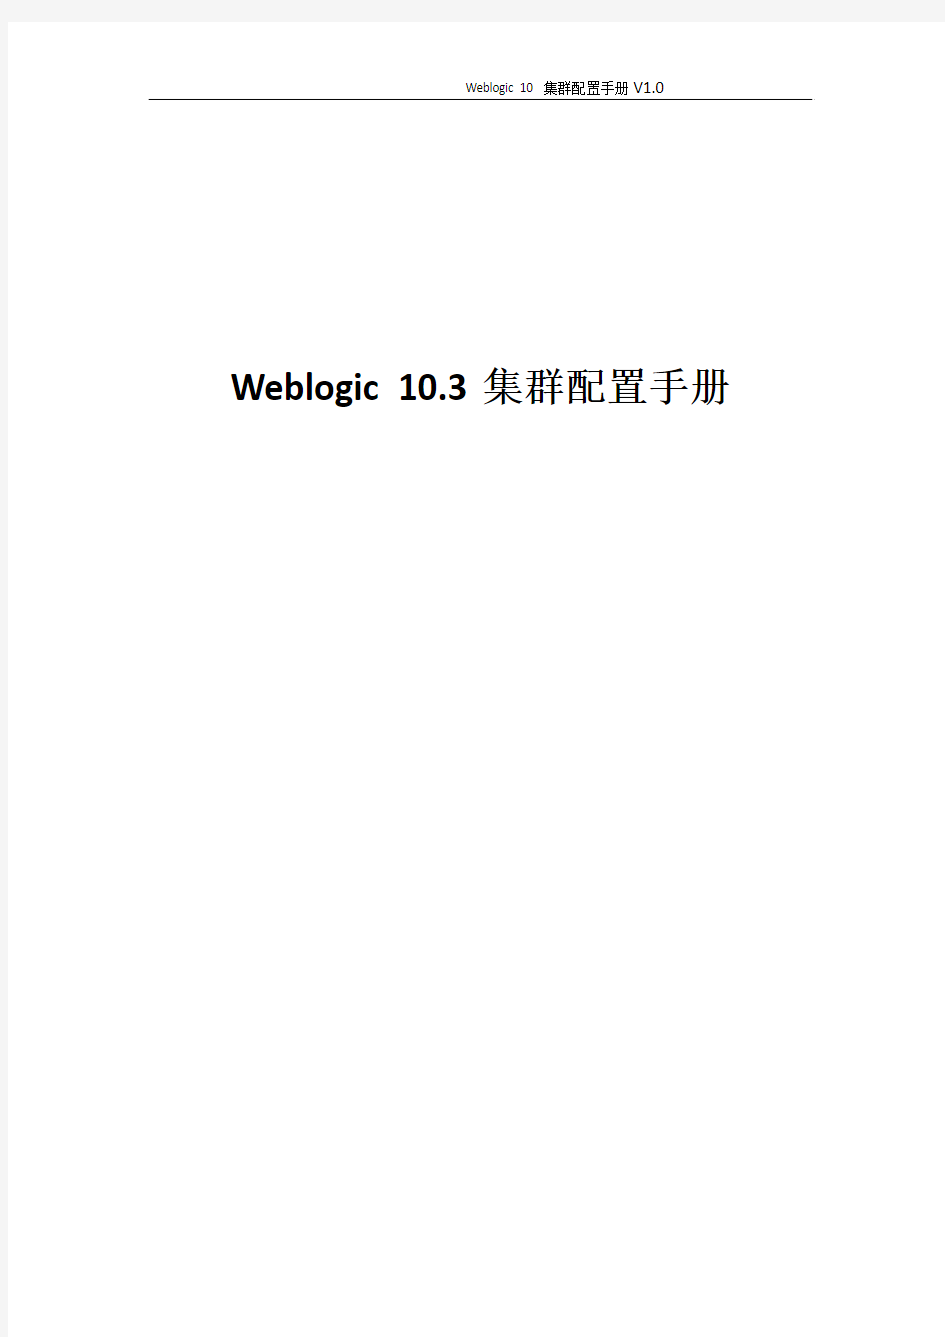 Weblogic10.3.6集群配置手册